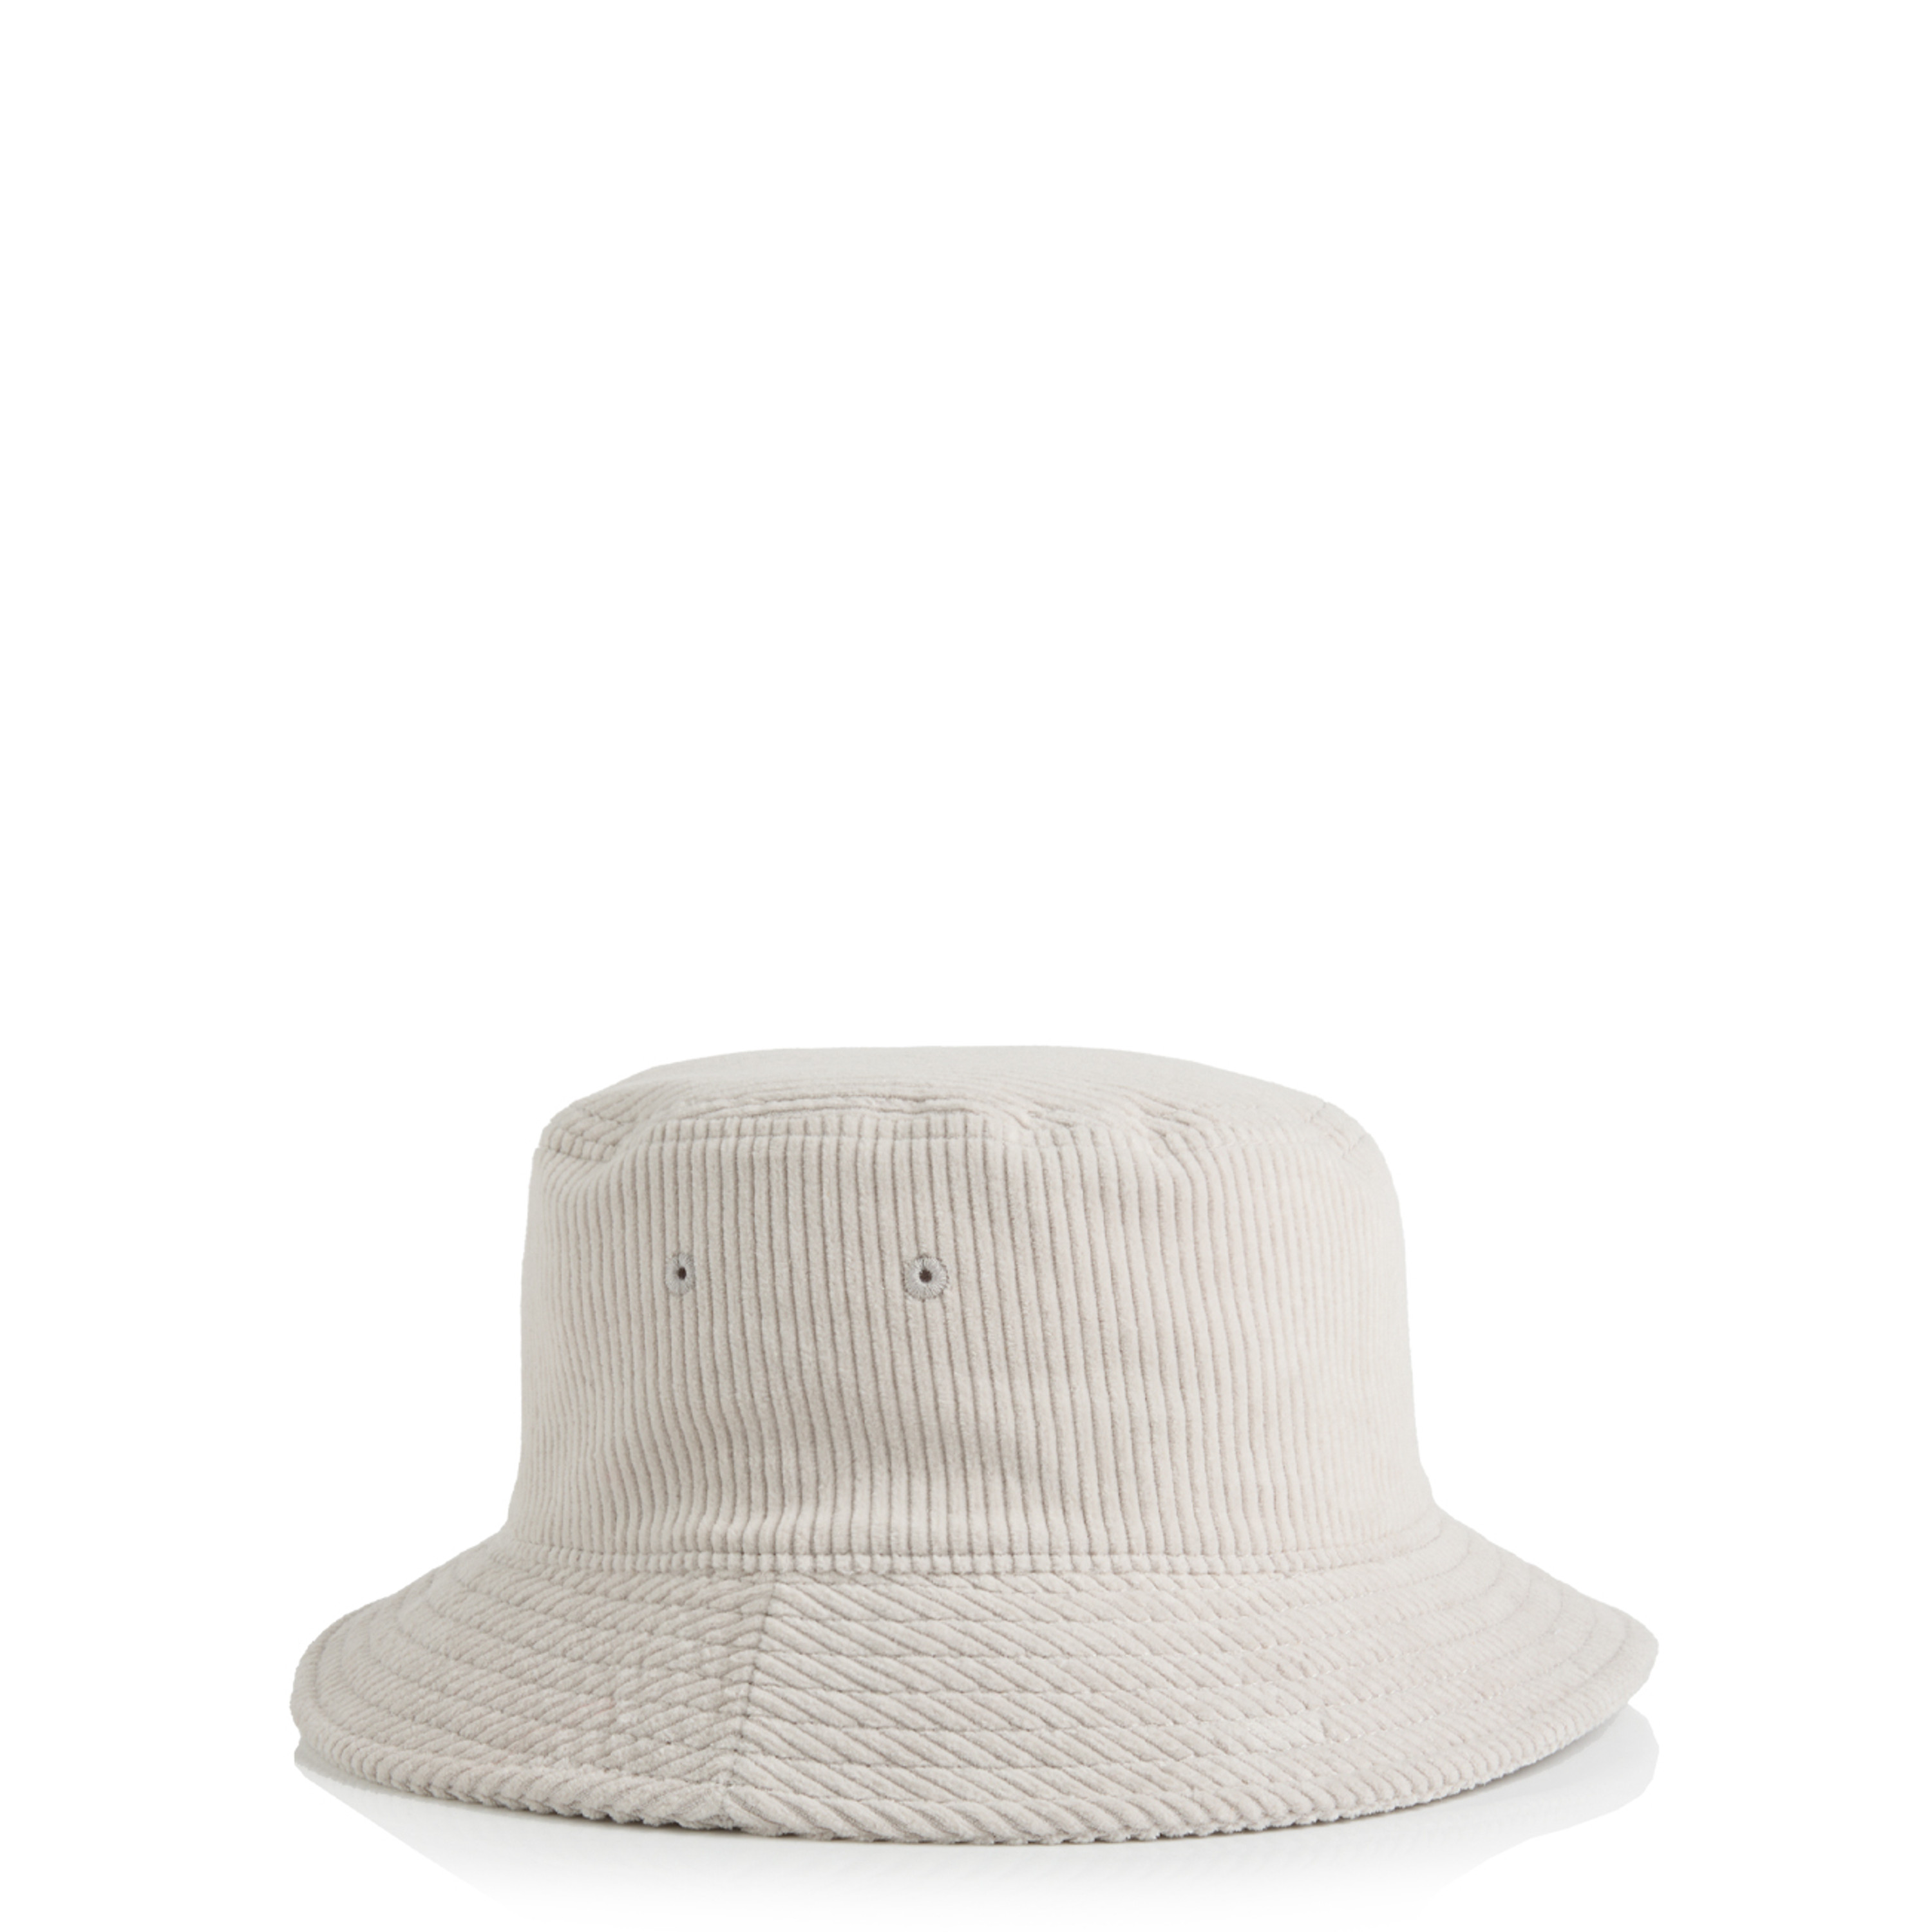 Cord Bucket Hat - 1176